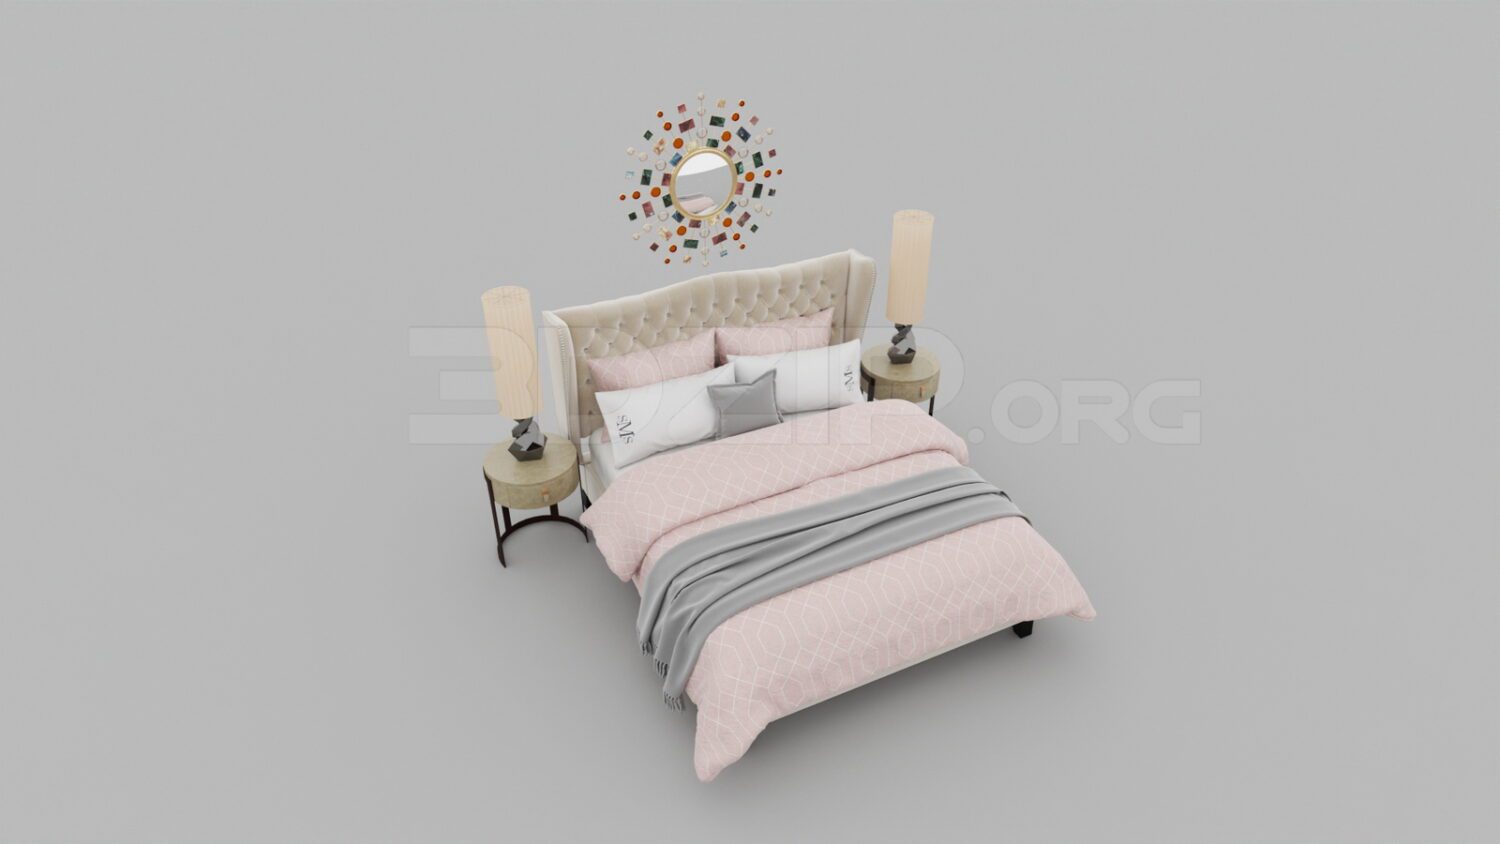 3640. Free 3D Bed Model Download